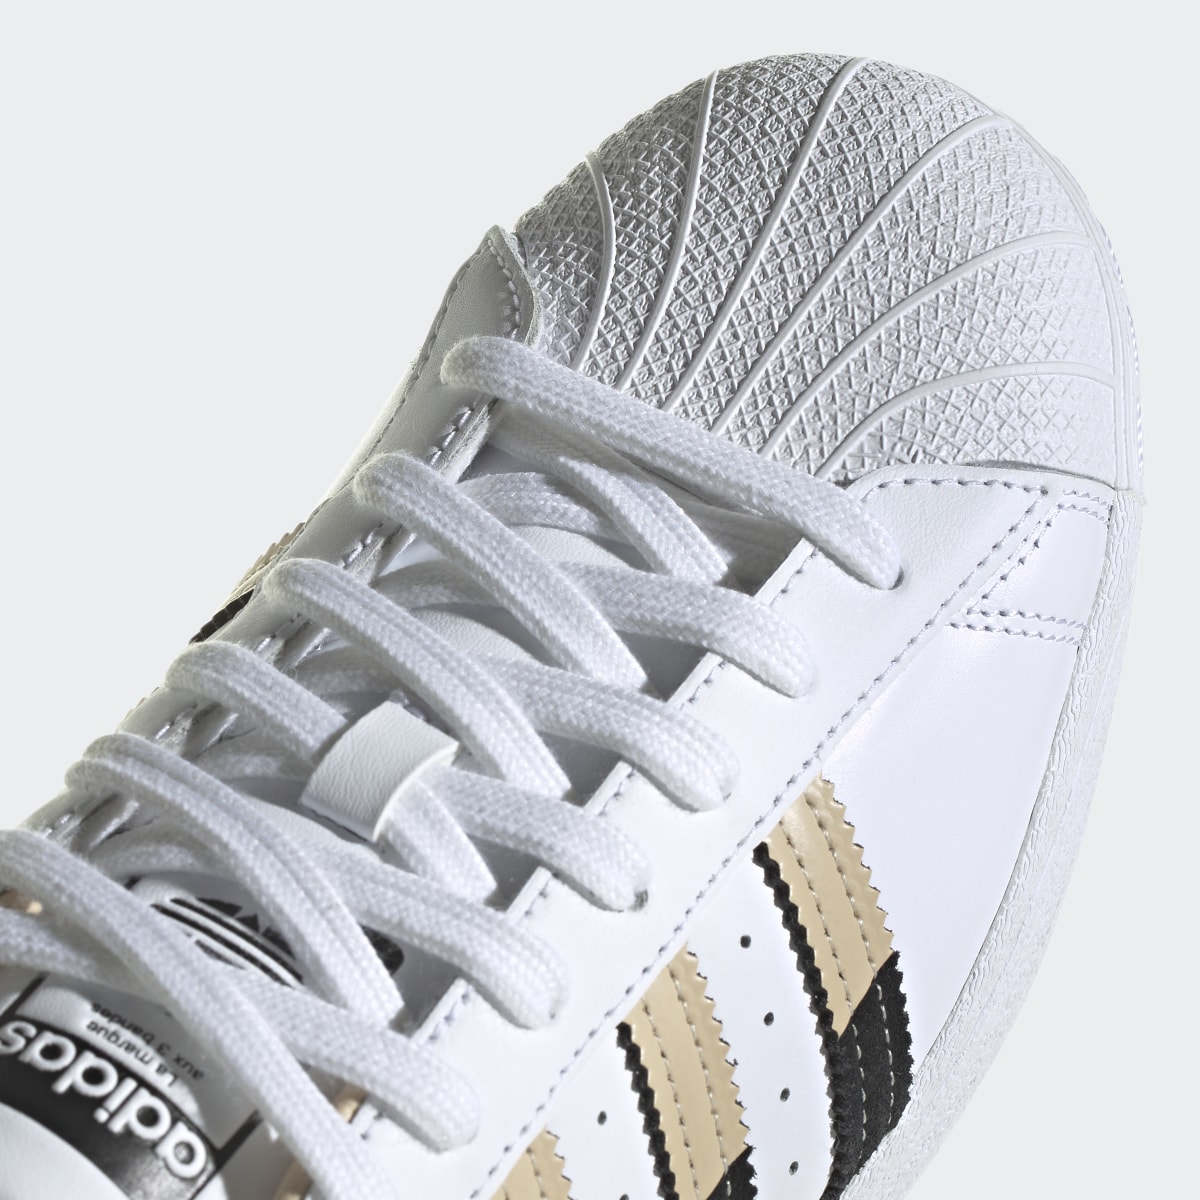 Adidas Superstar Shoes. 8